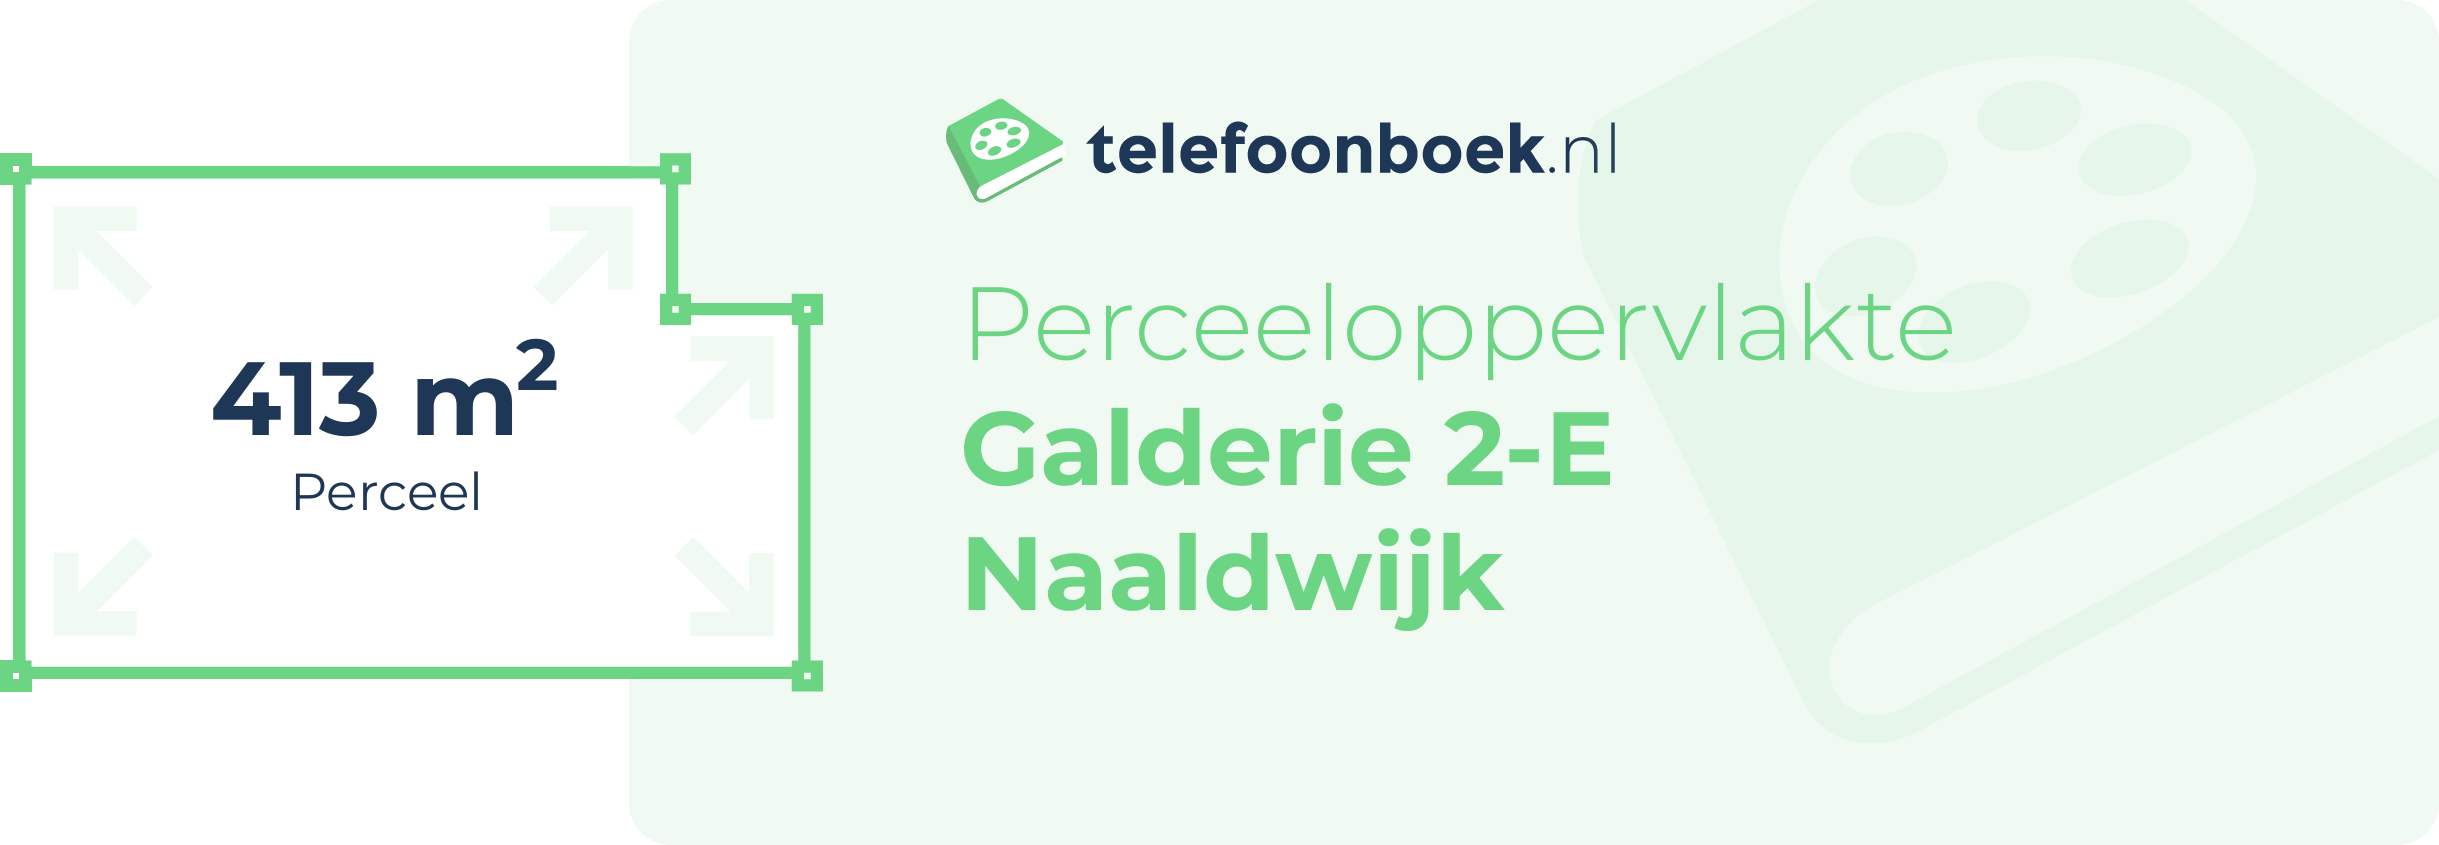 Perceeloppervlakte Galderie 2-E Naaldwijk